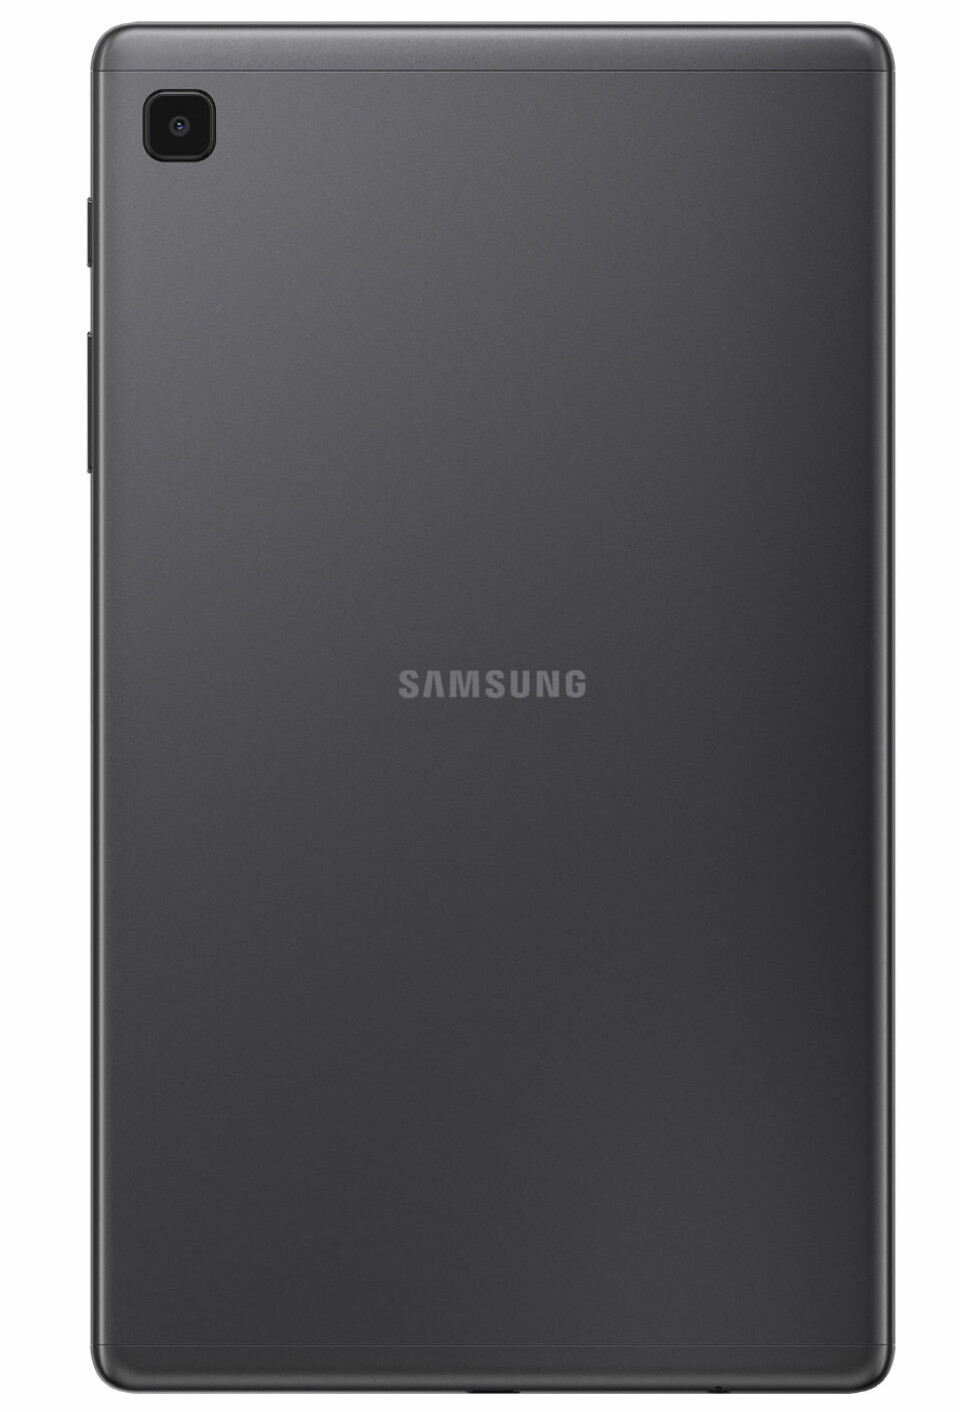 Samsung Galaxy Tab A7 Lite. Foto: Samsung